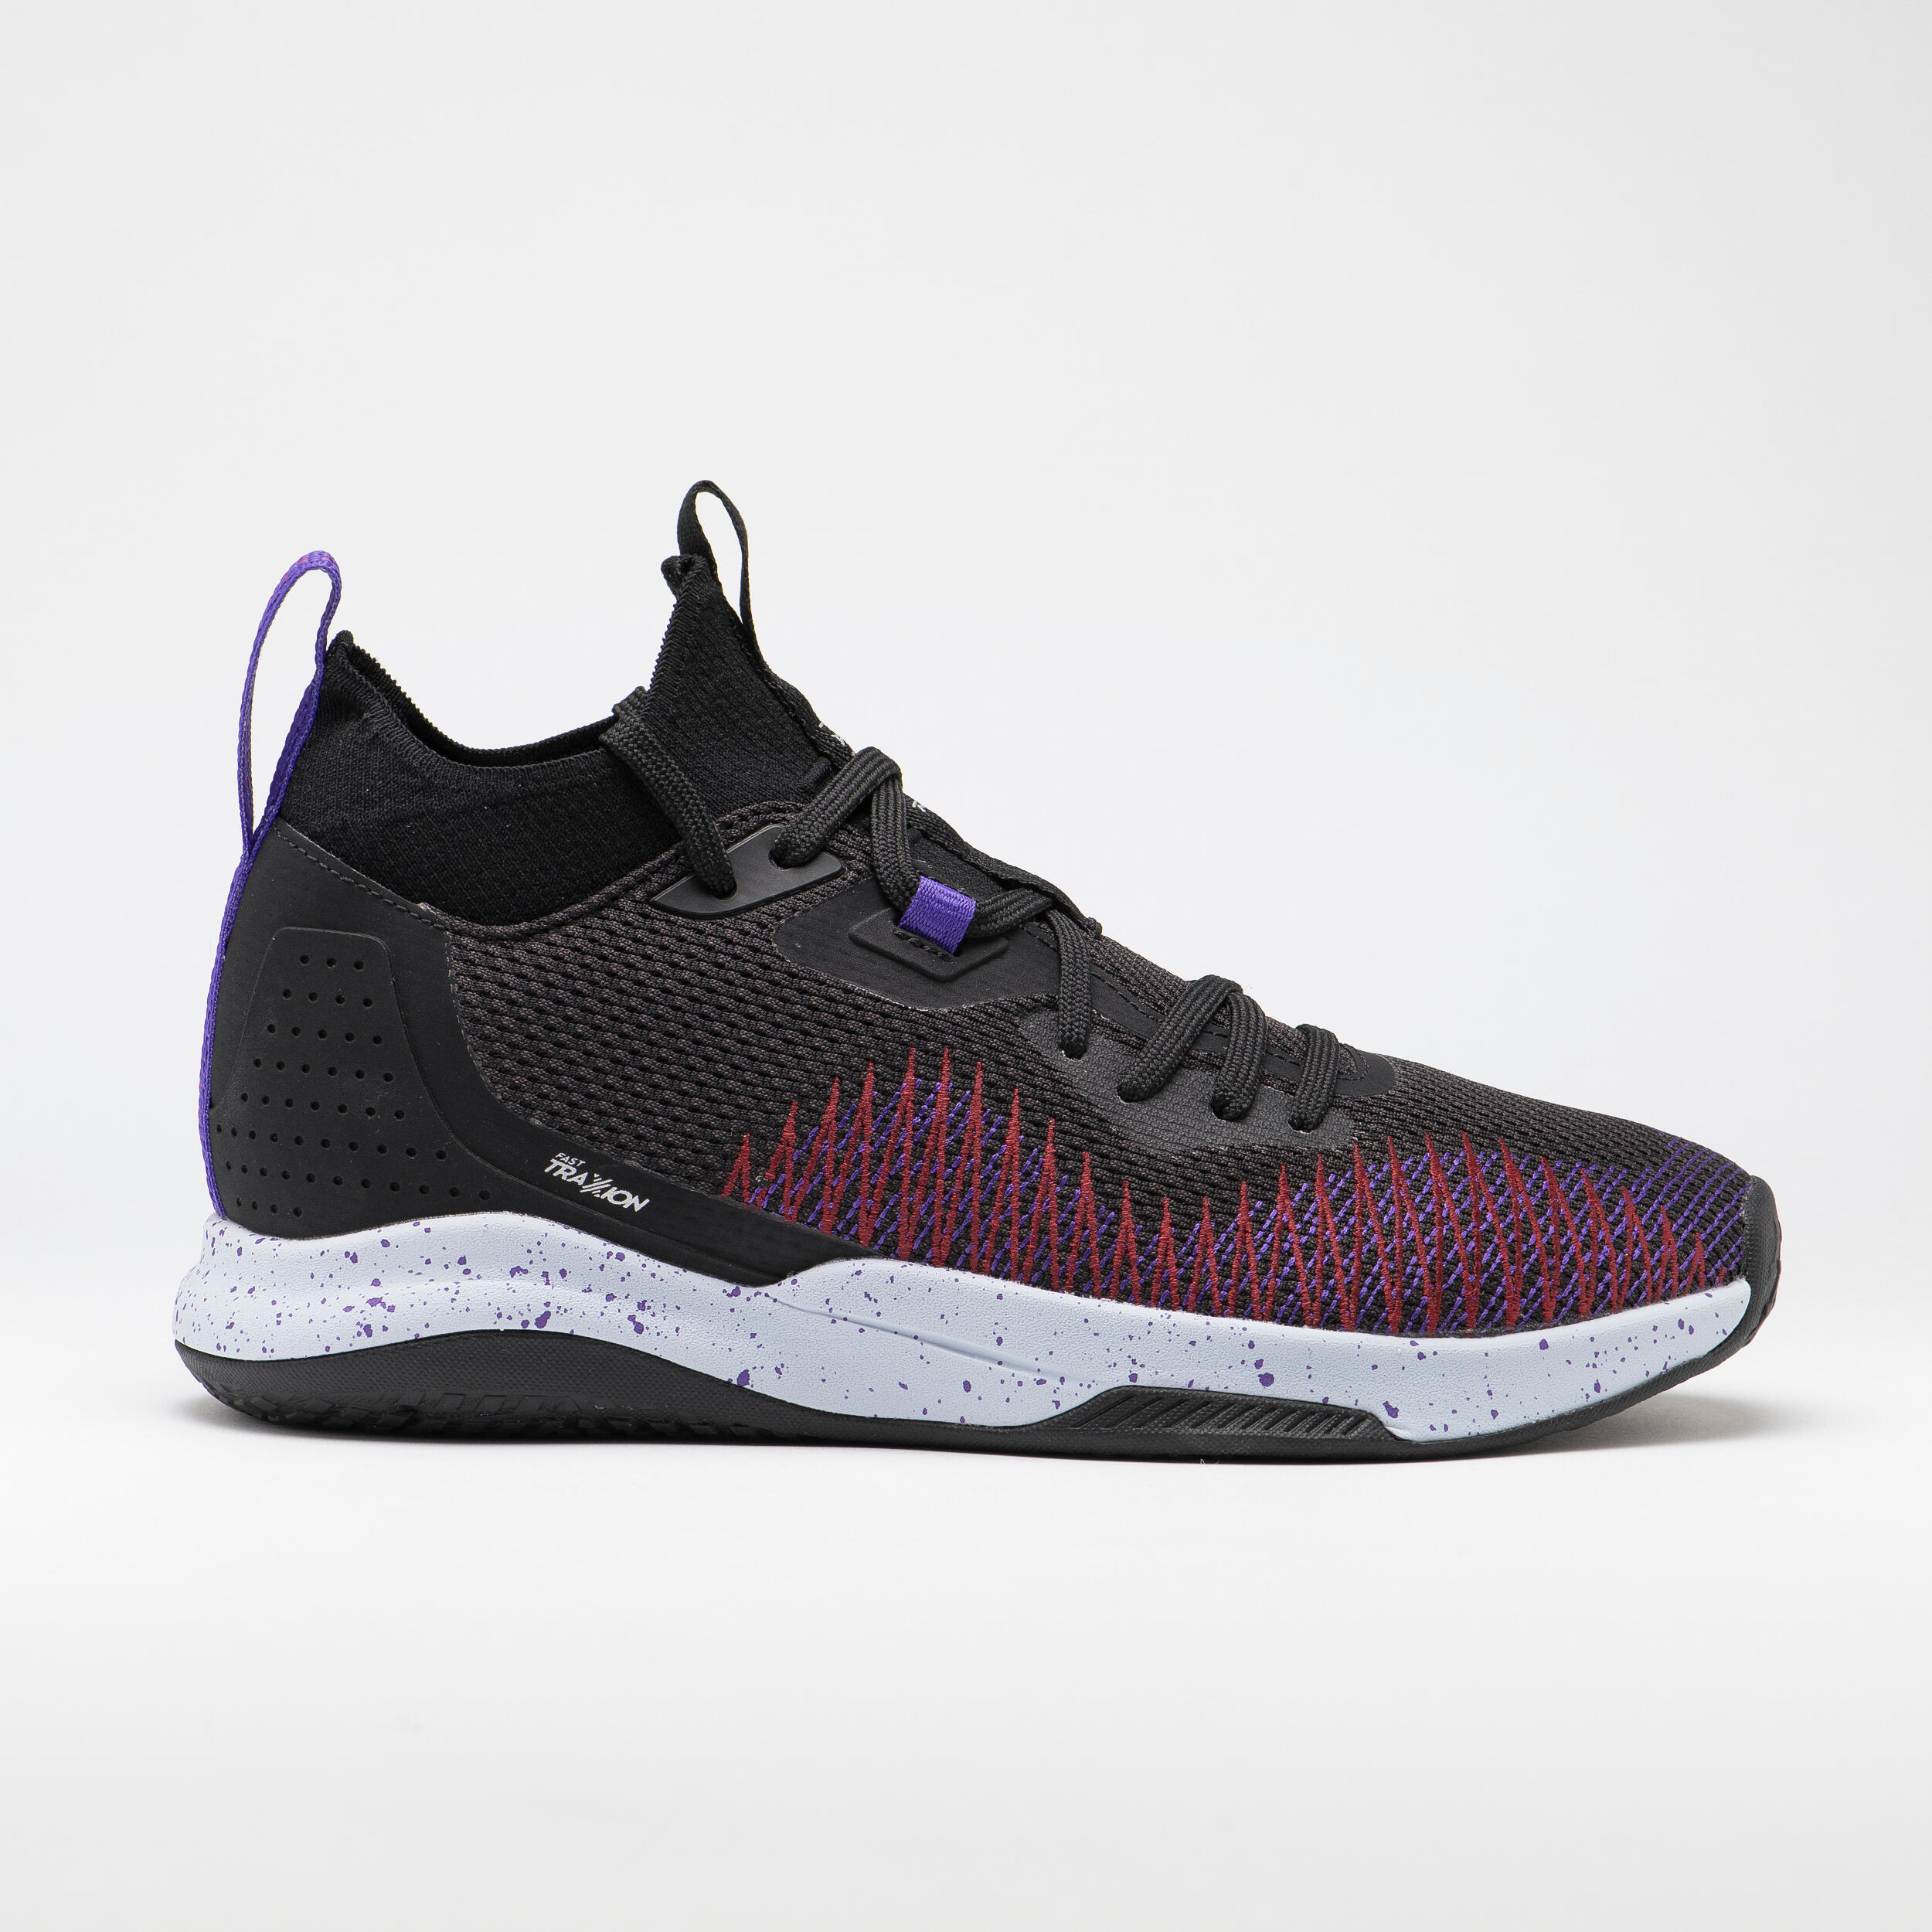 TARMAK Women's Basketball Shoes Fast 500 - Black/Purple